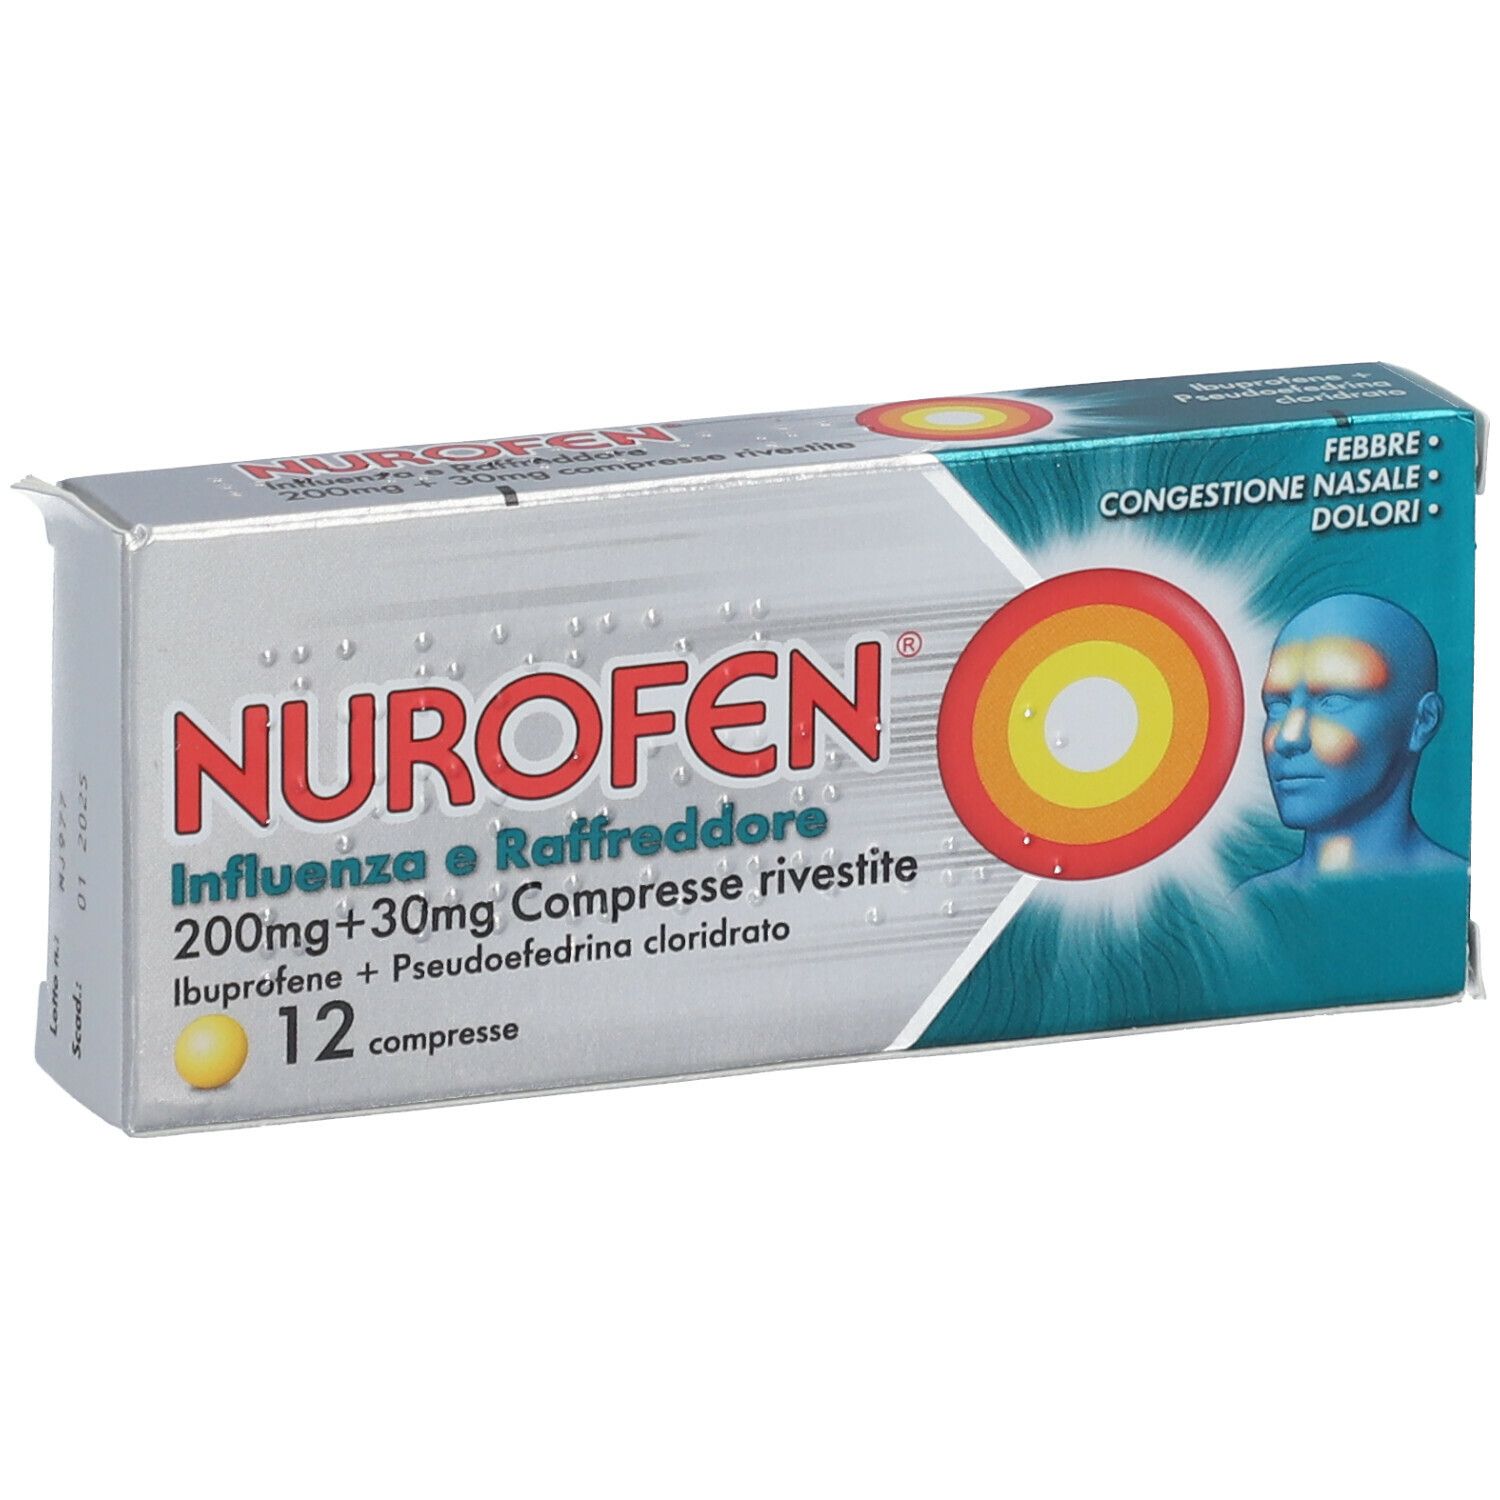 Nurofen® Influenza e Raffreddore 200mg+30mg compresse rivestite